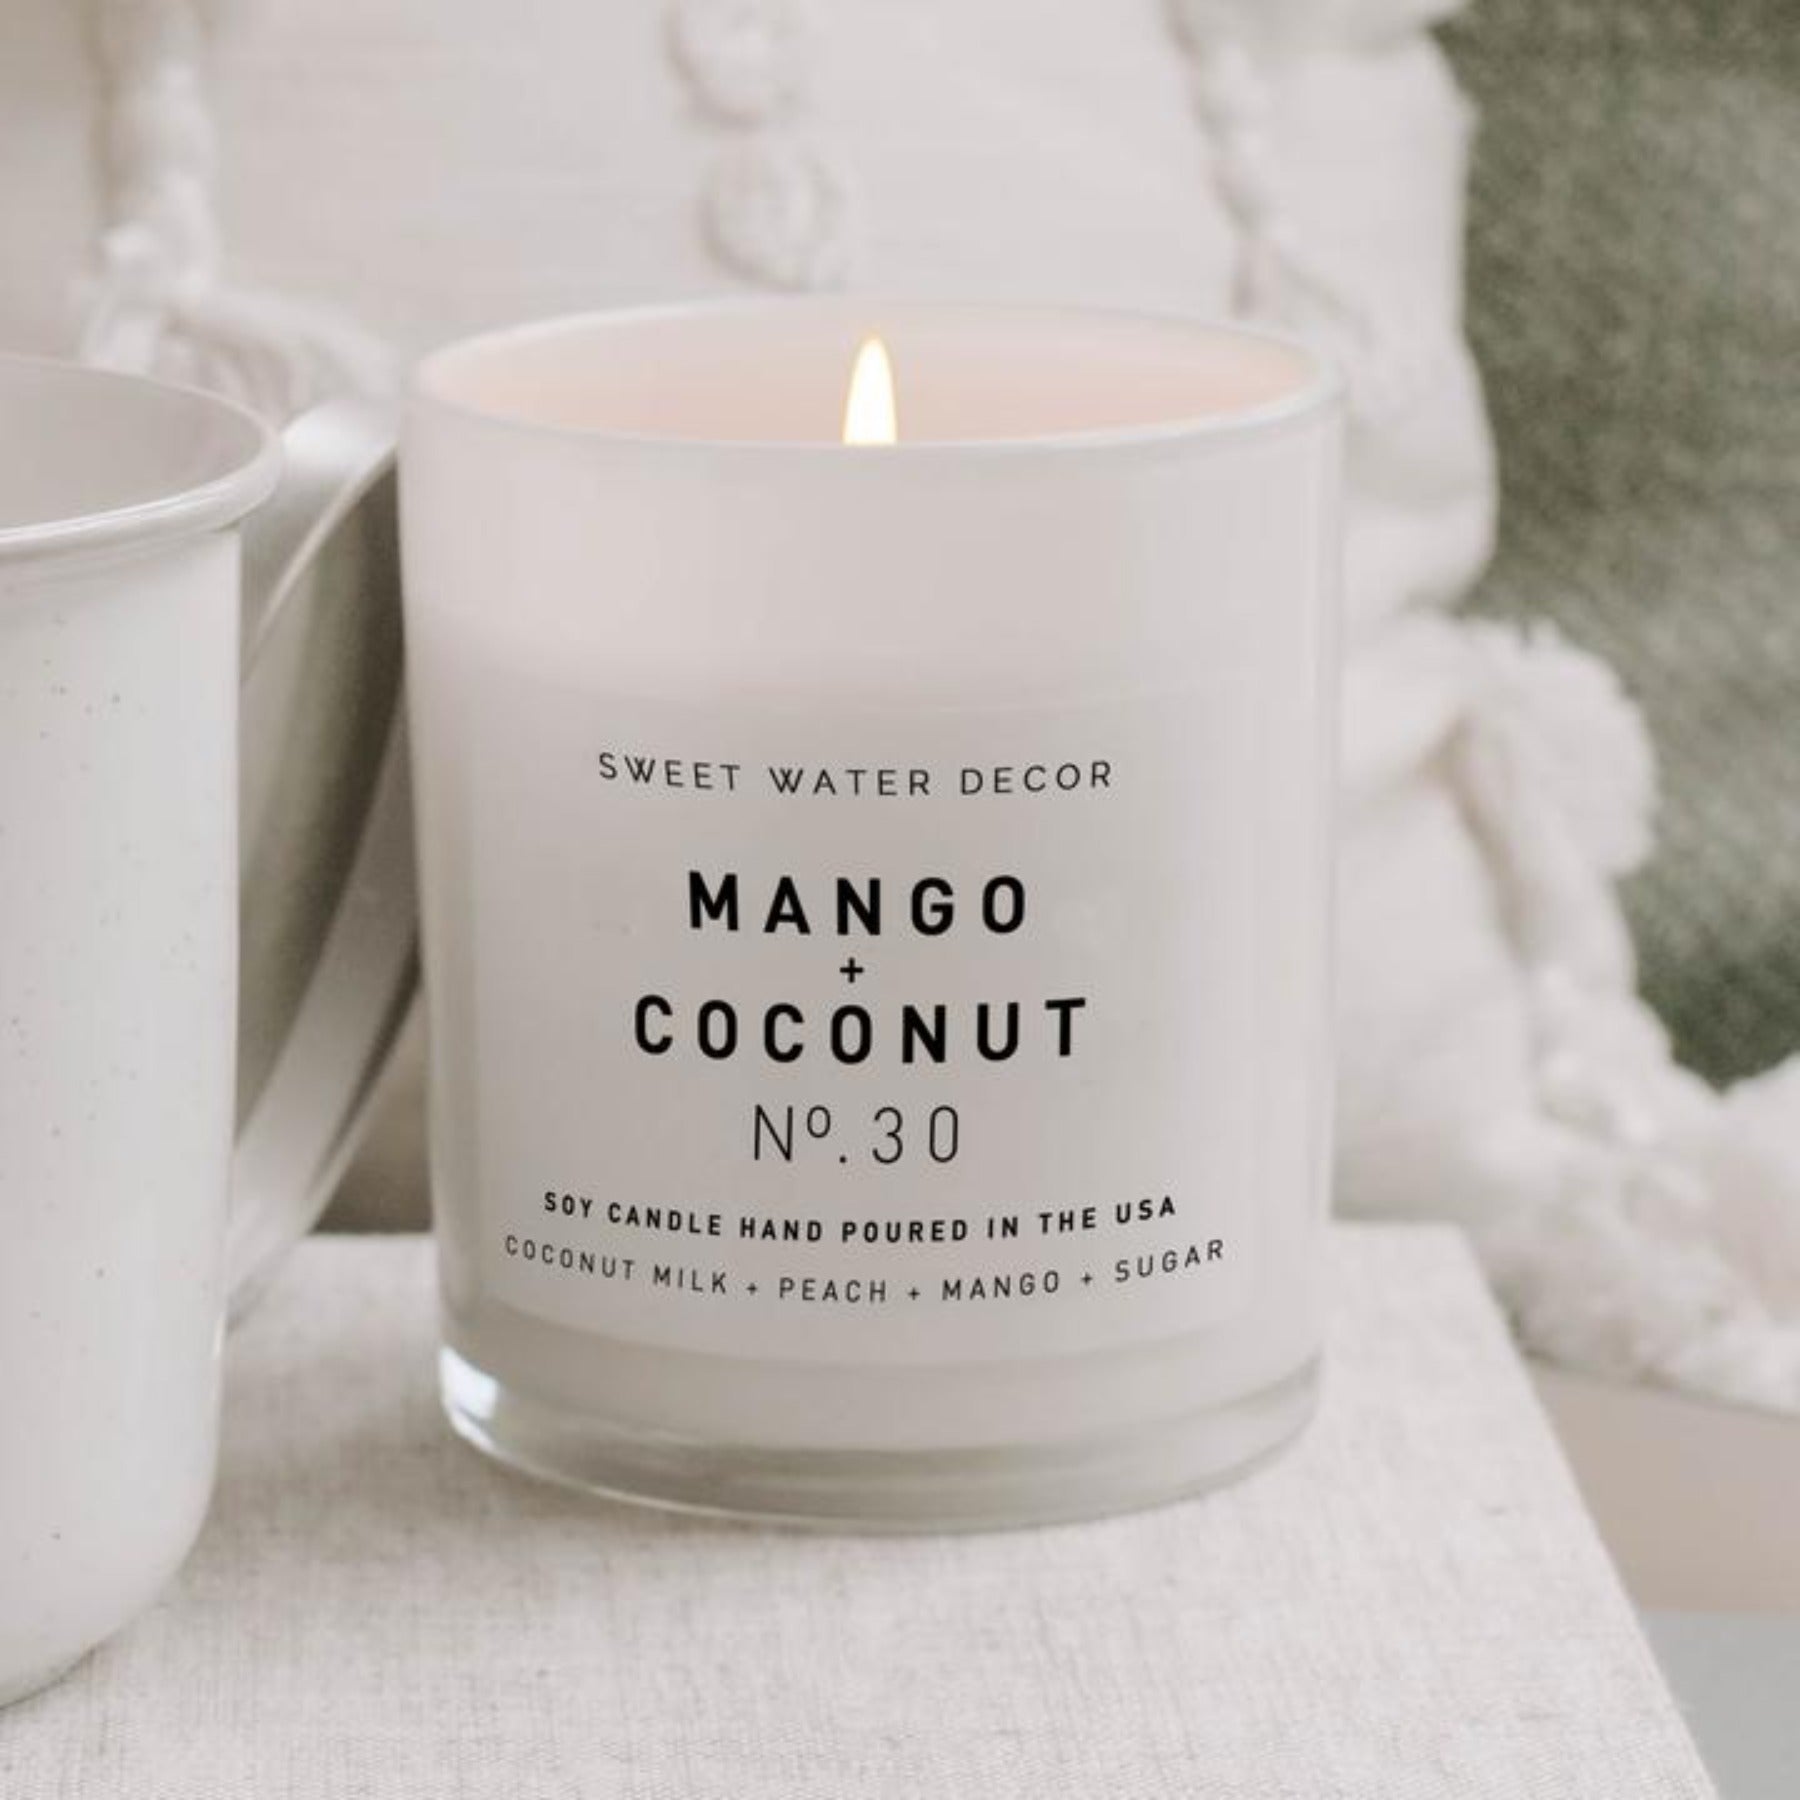 Mango + Coconut Soy Candle